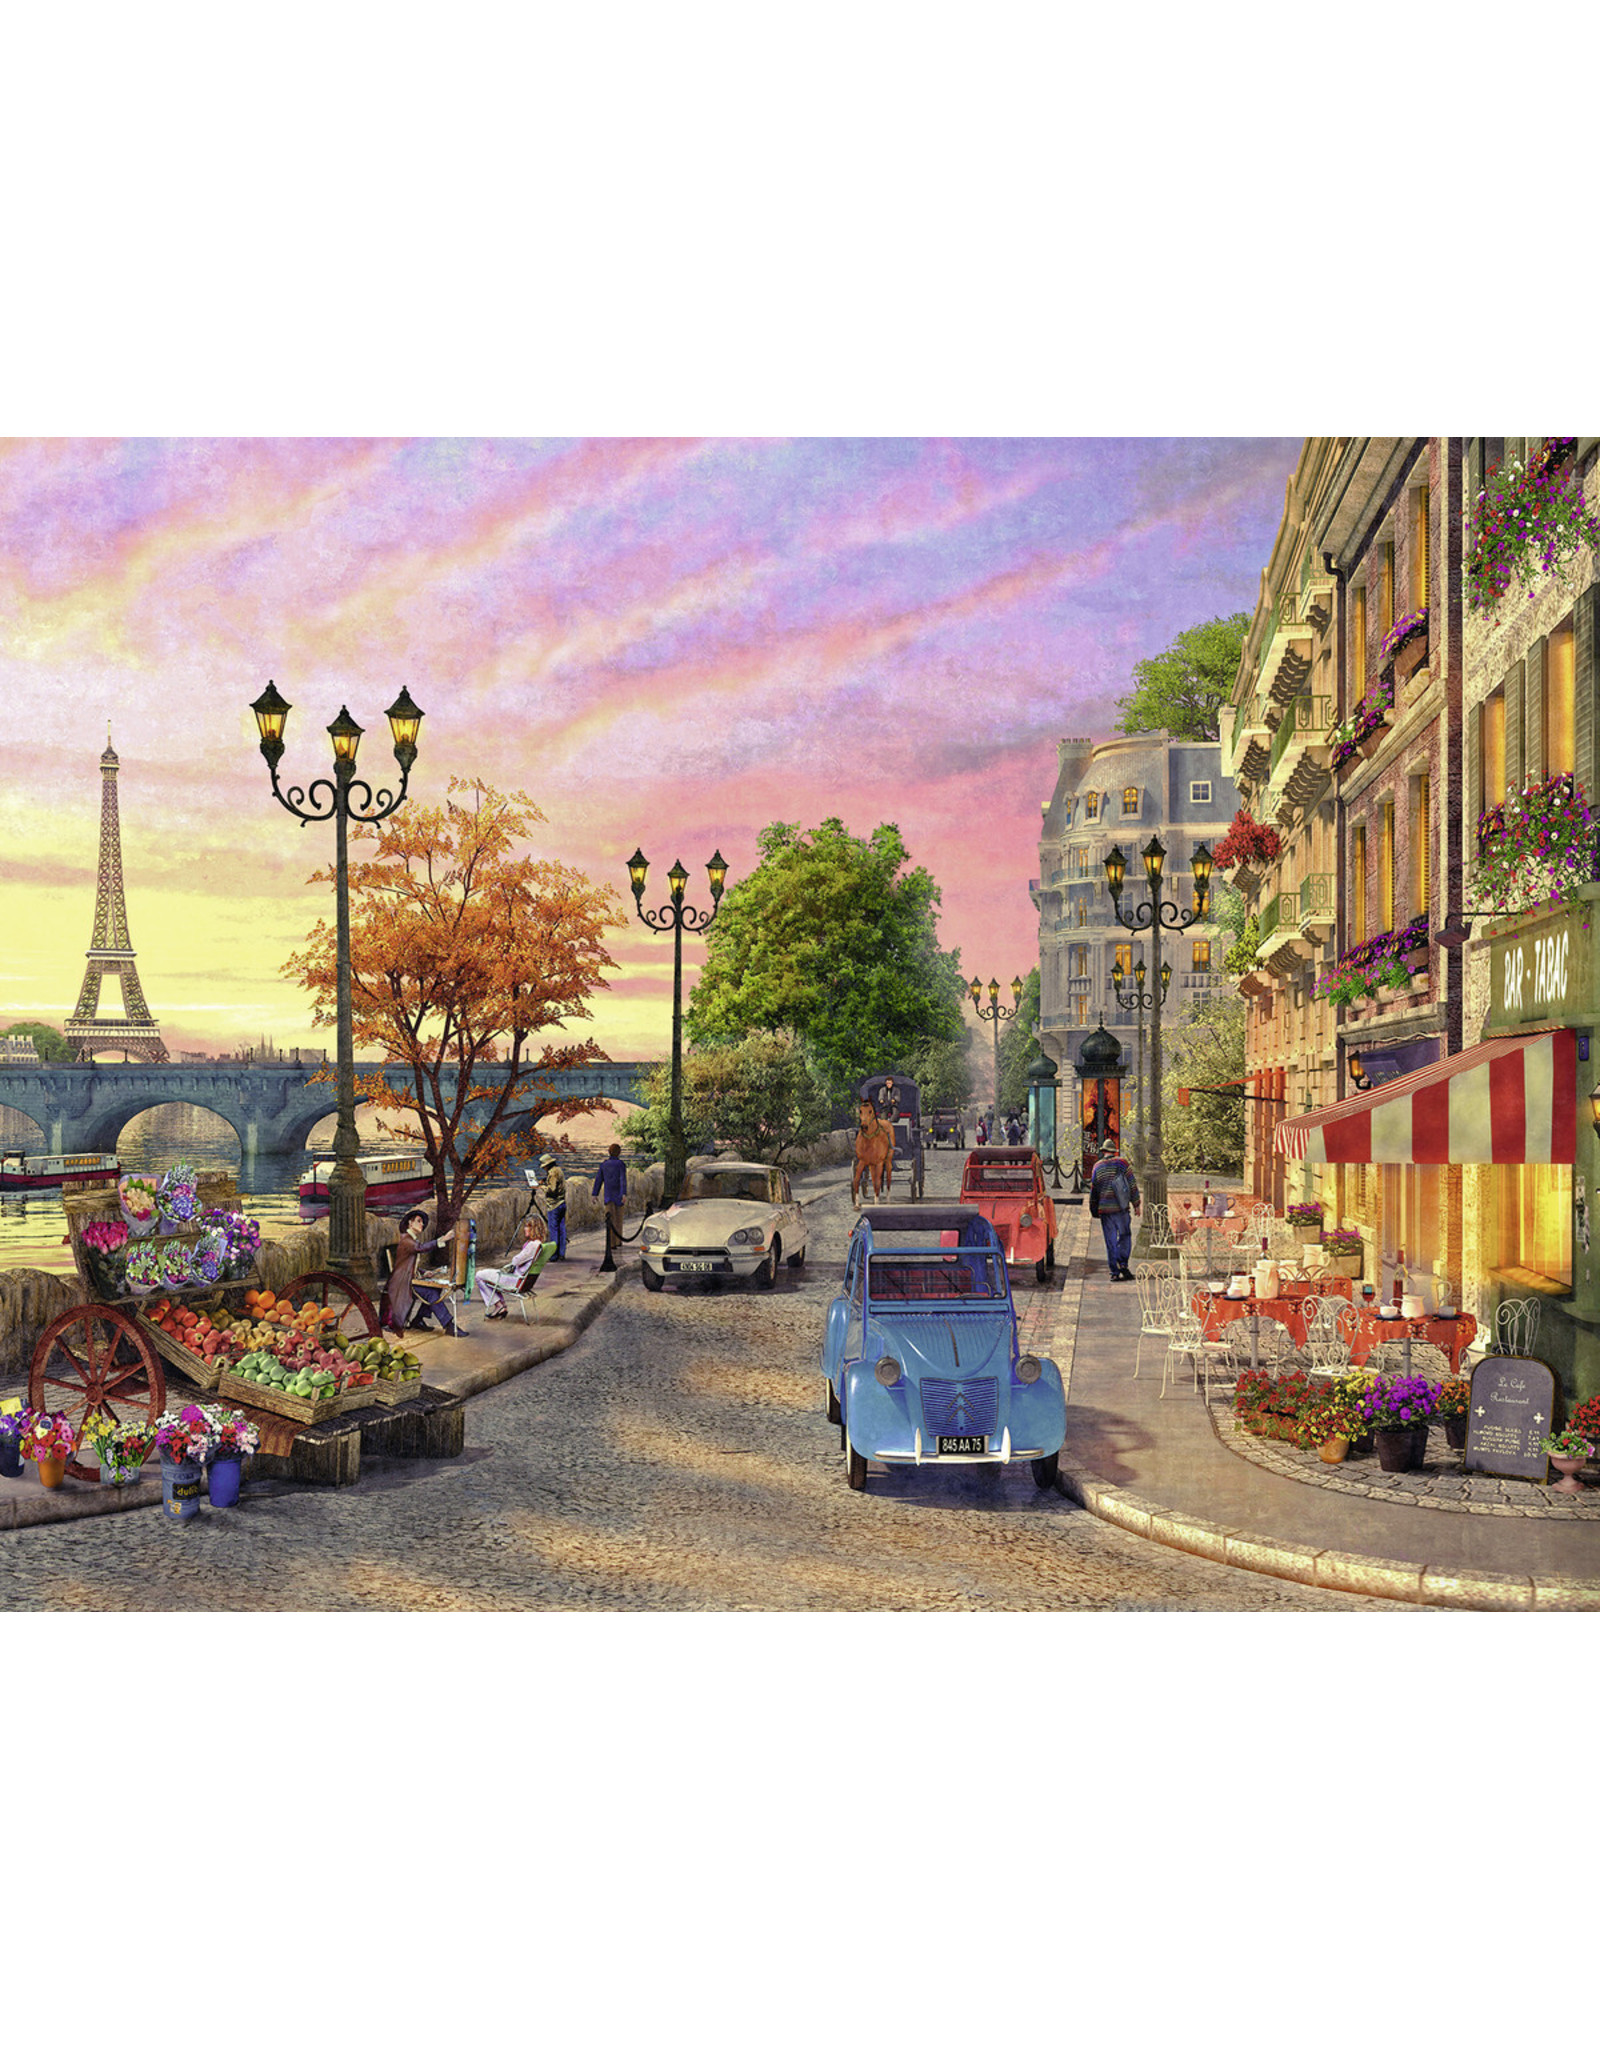 Ravensburger Ravensburger puzzel Avondsfeer in Parijs  500 stukjes